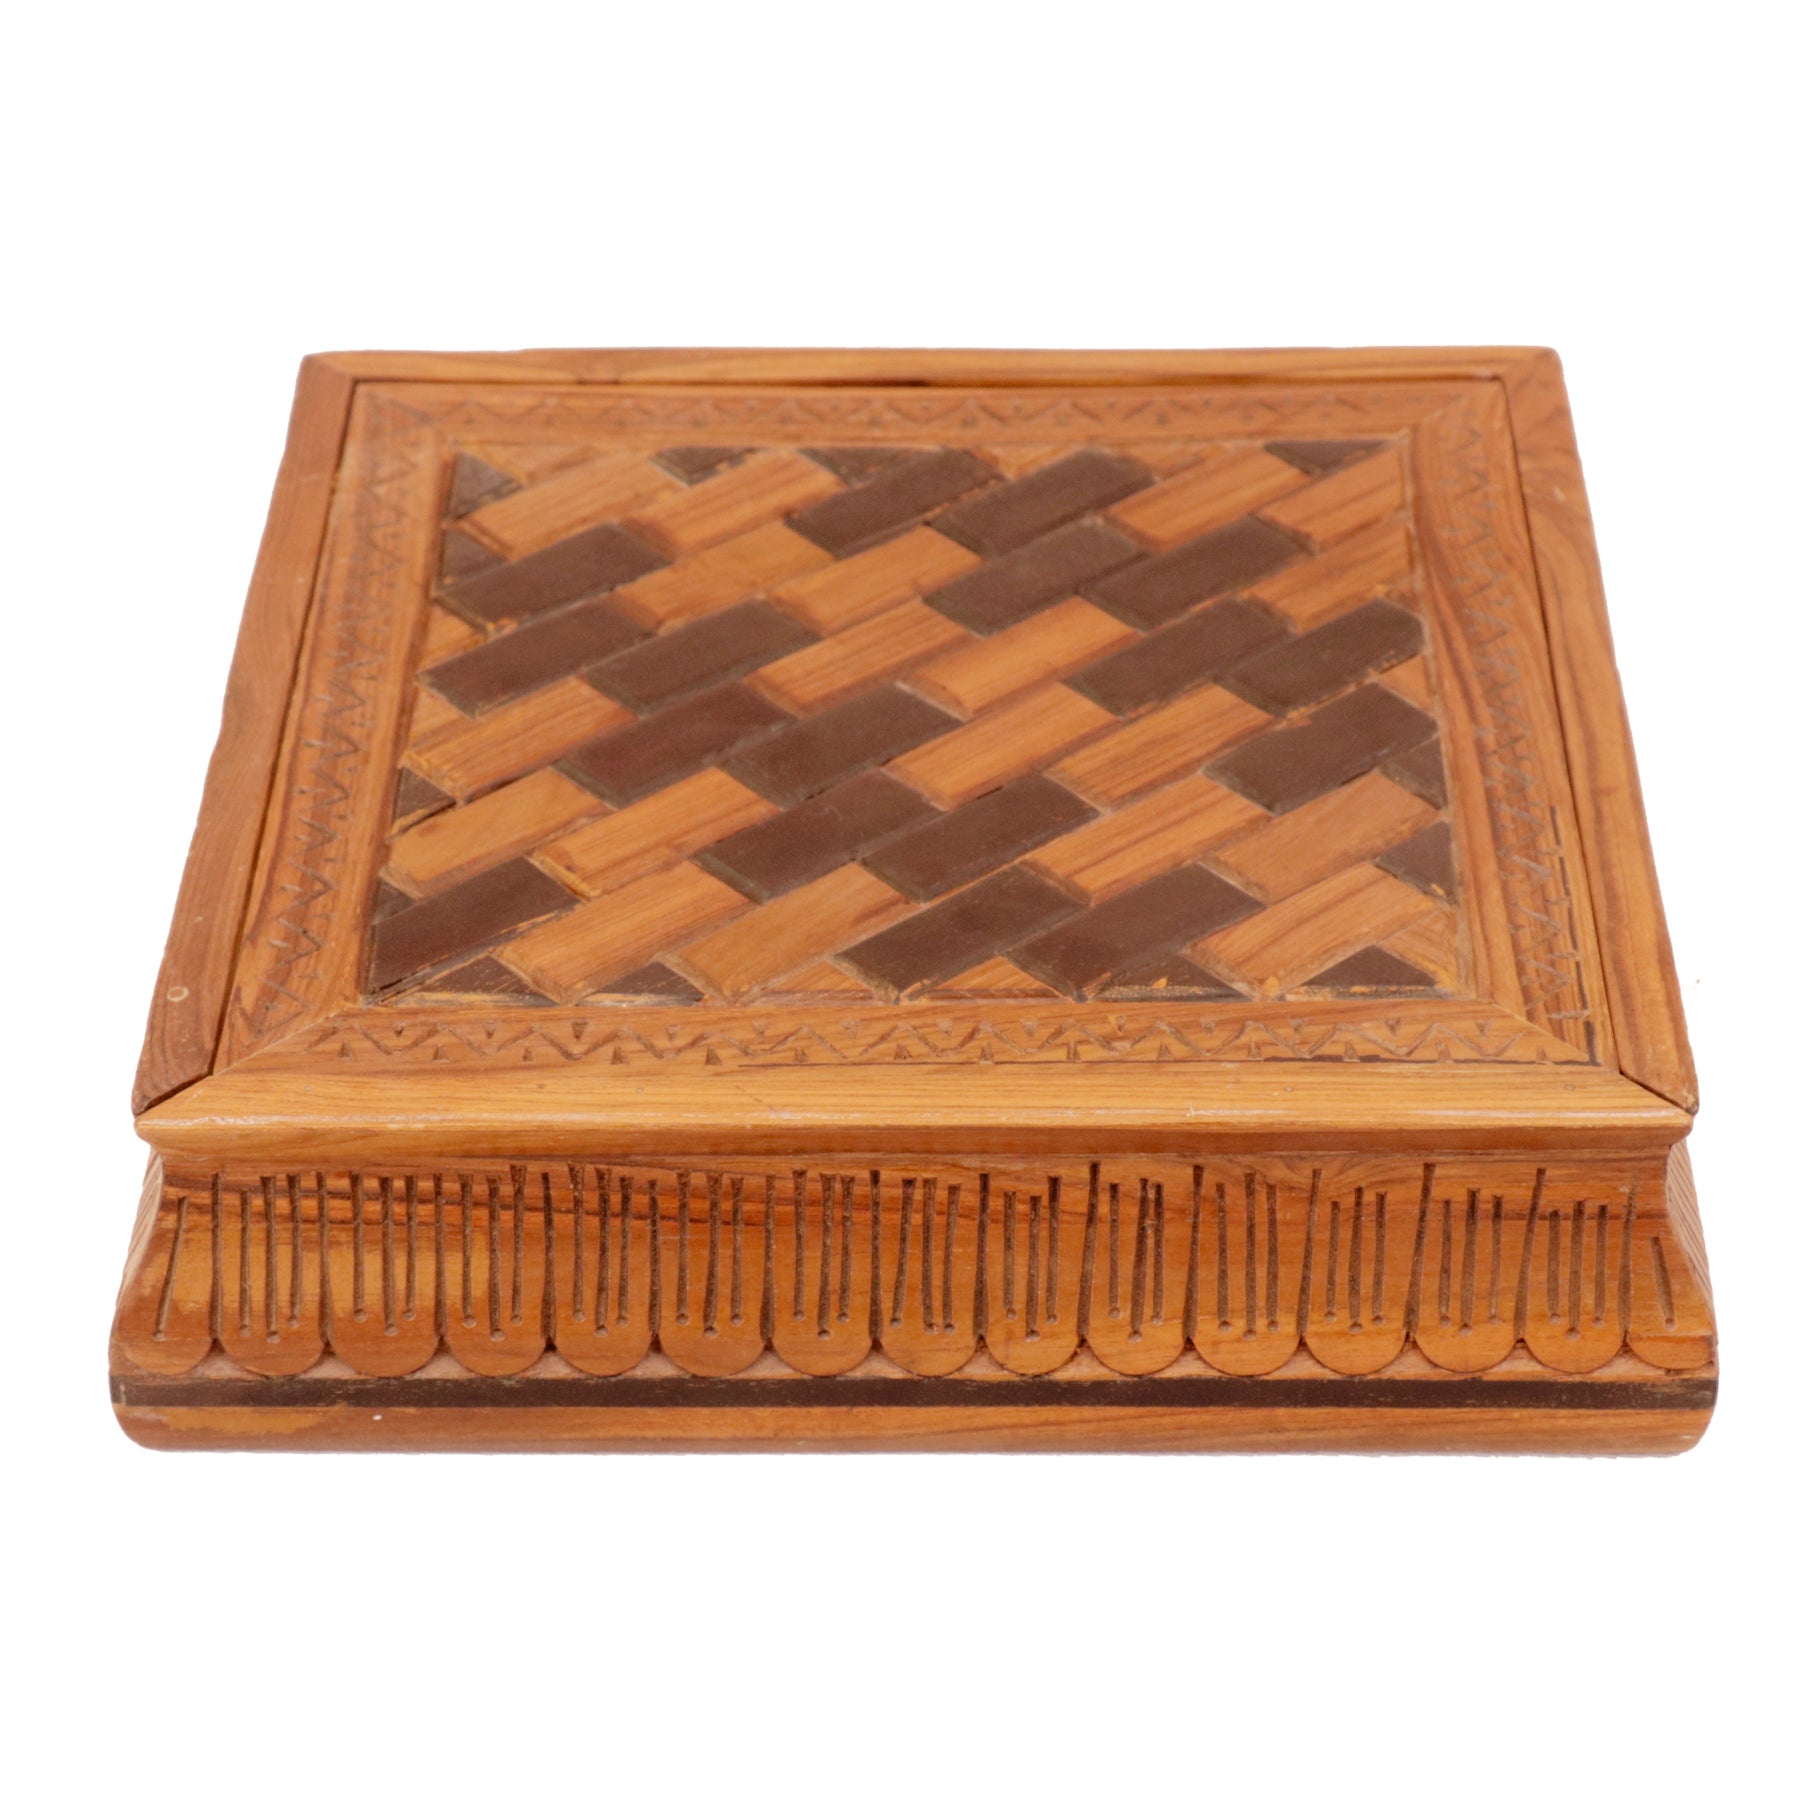 Checkered Tile Box Wooden Box